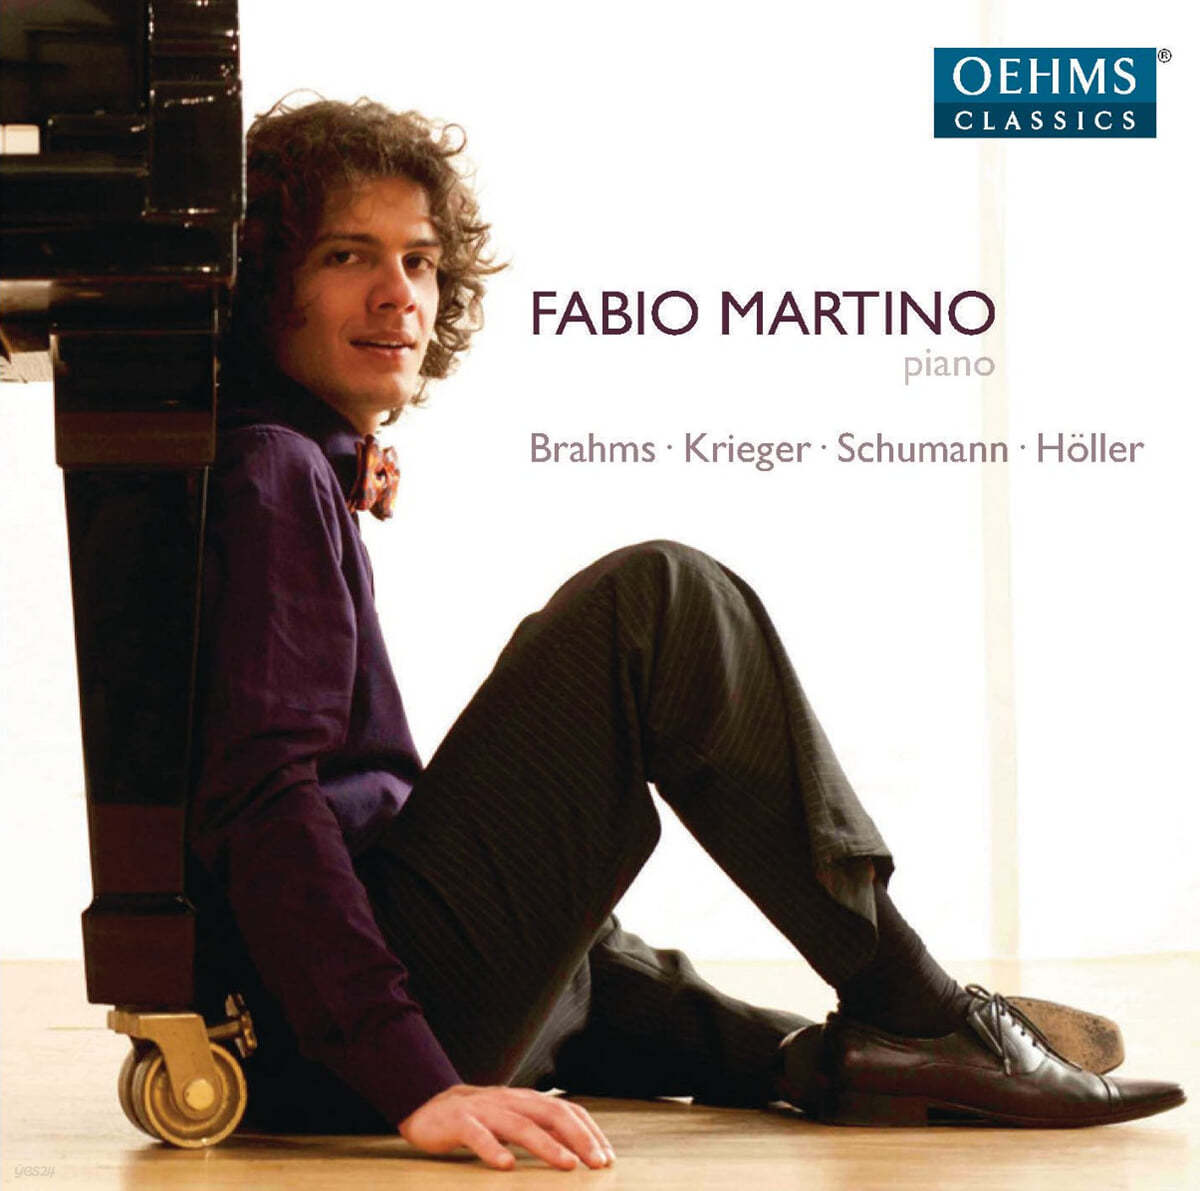 Fabio Martino 파비오 마르티노 - 리사이틀 (Brahms / Krieger / Schumann / Holler) 